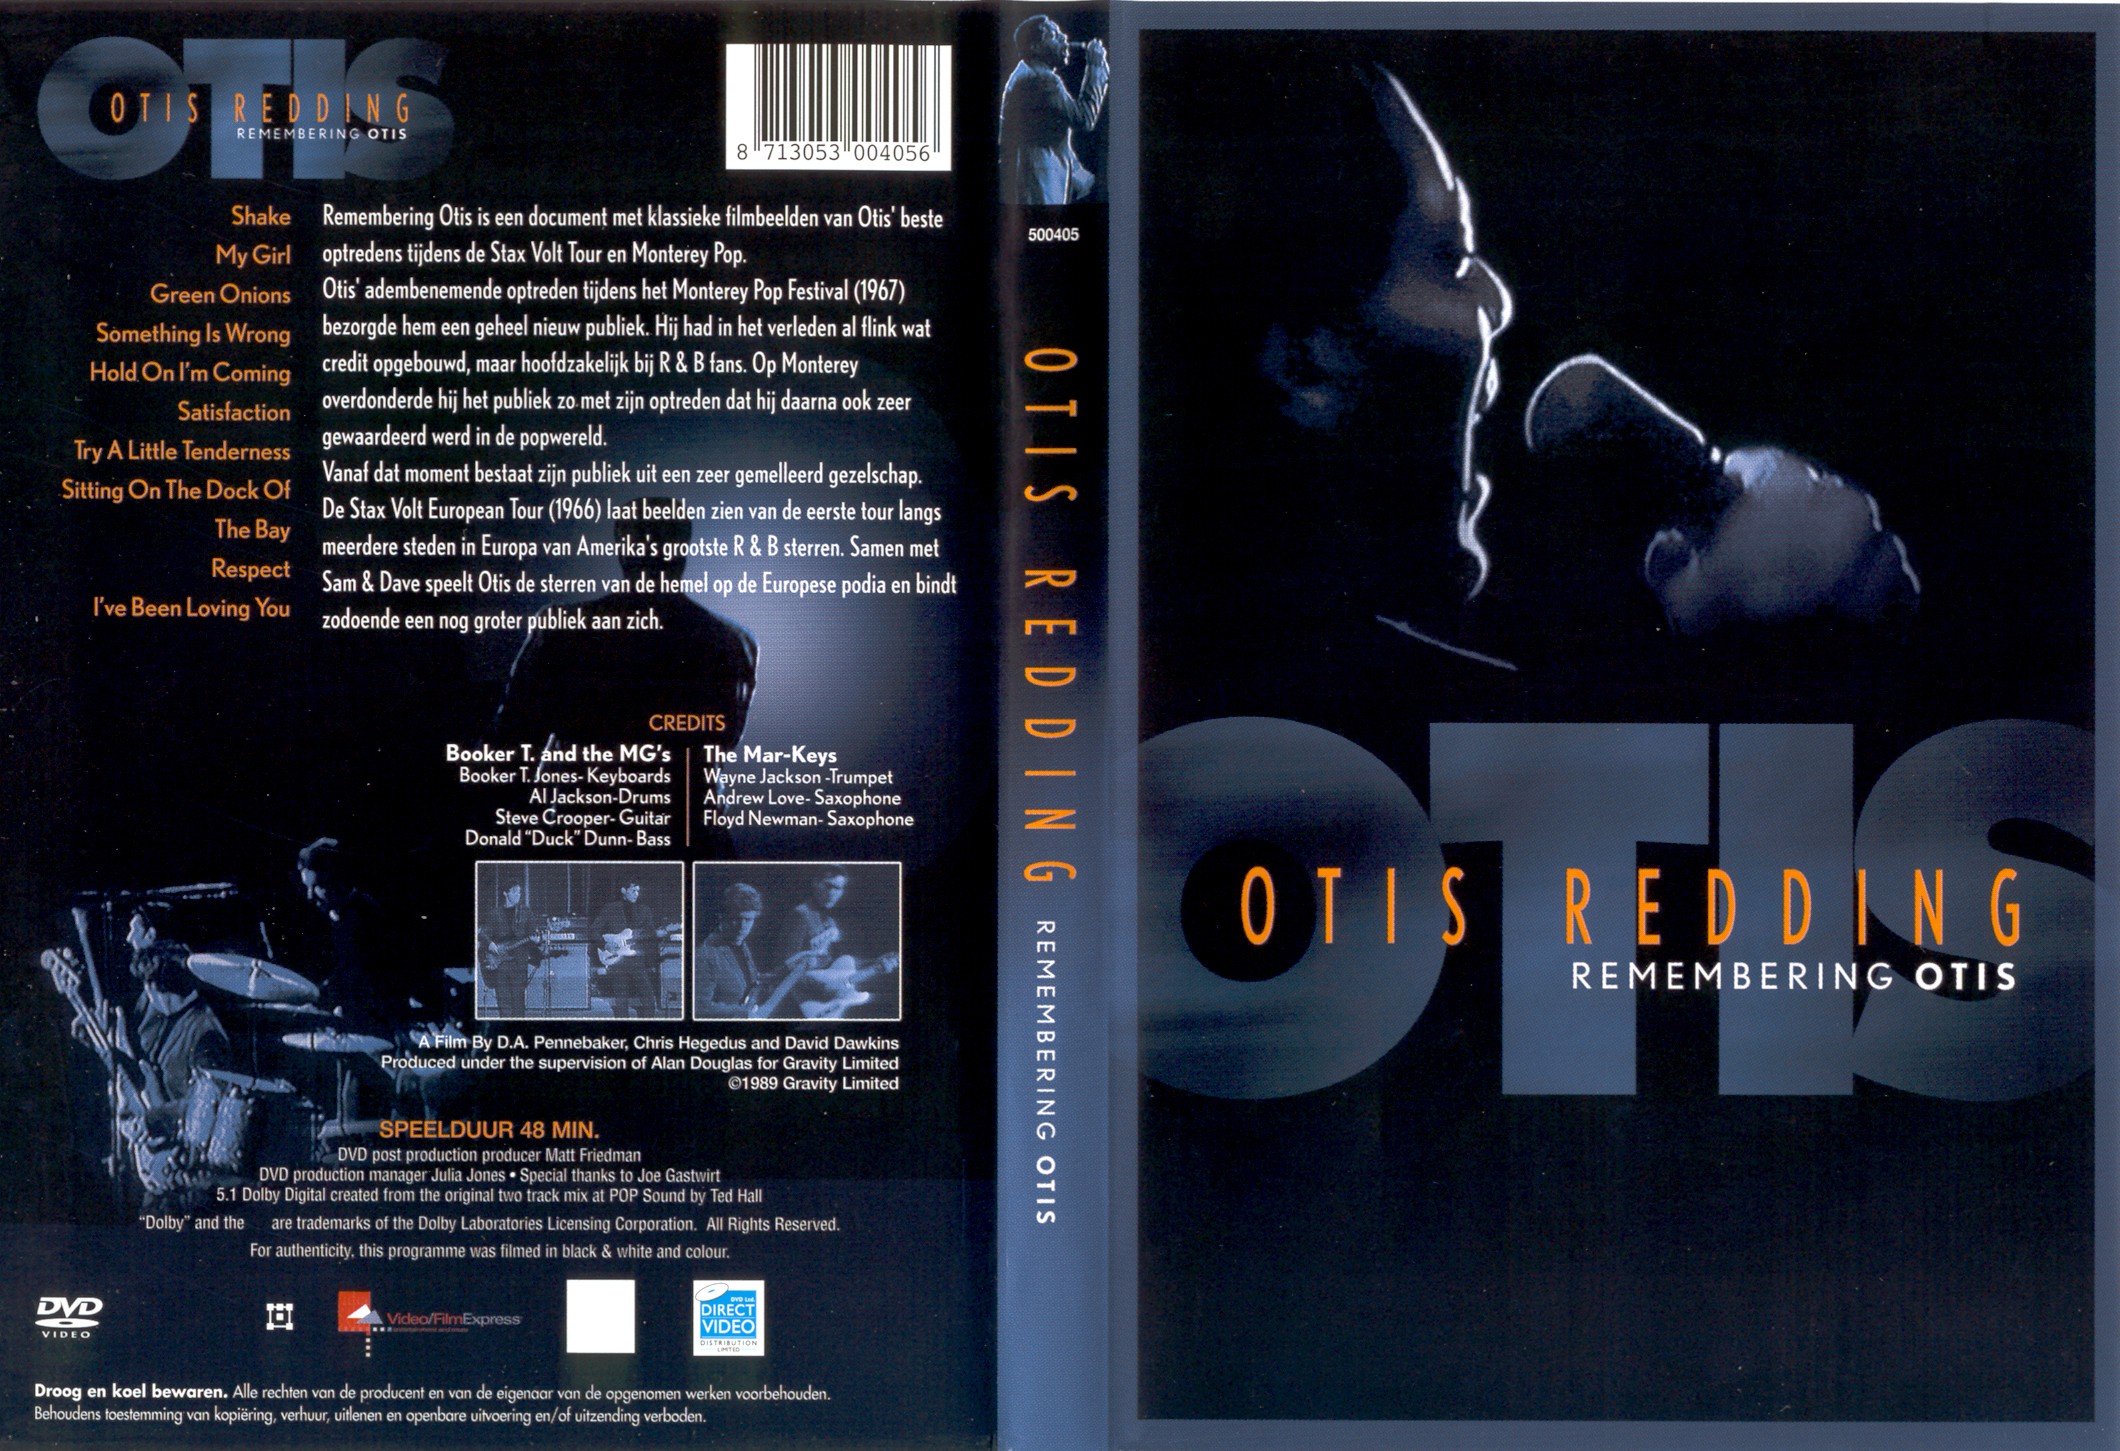 Jaquette DVD Otis Redding remembering otis